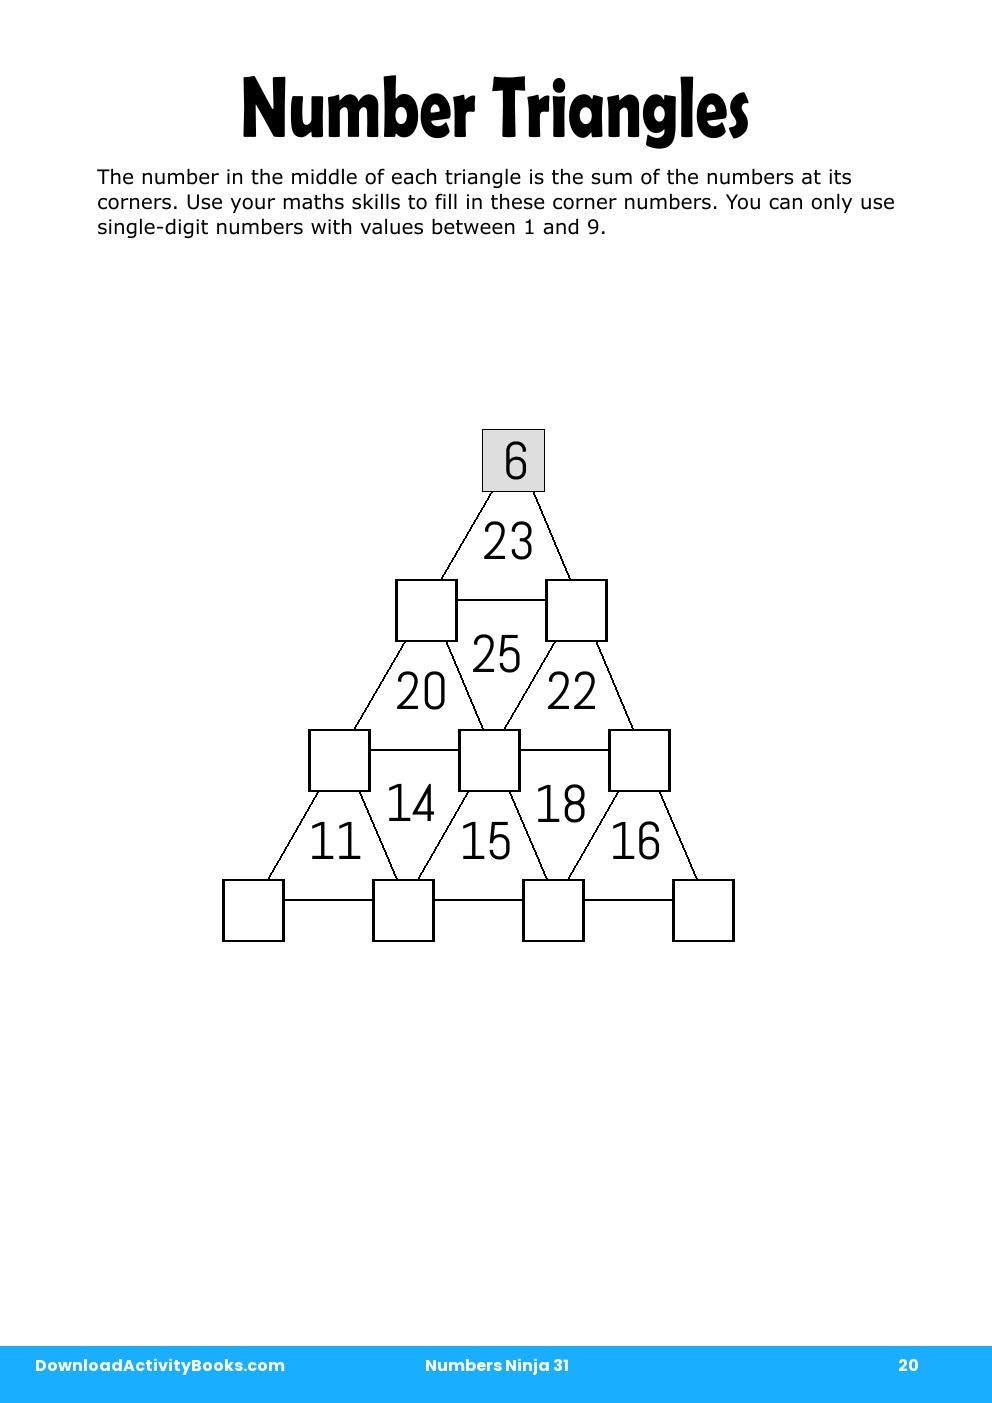 Number Triangles in Numbers Ninja 31